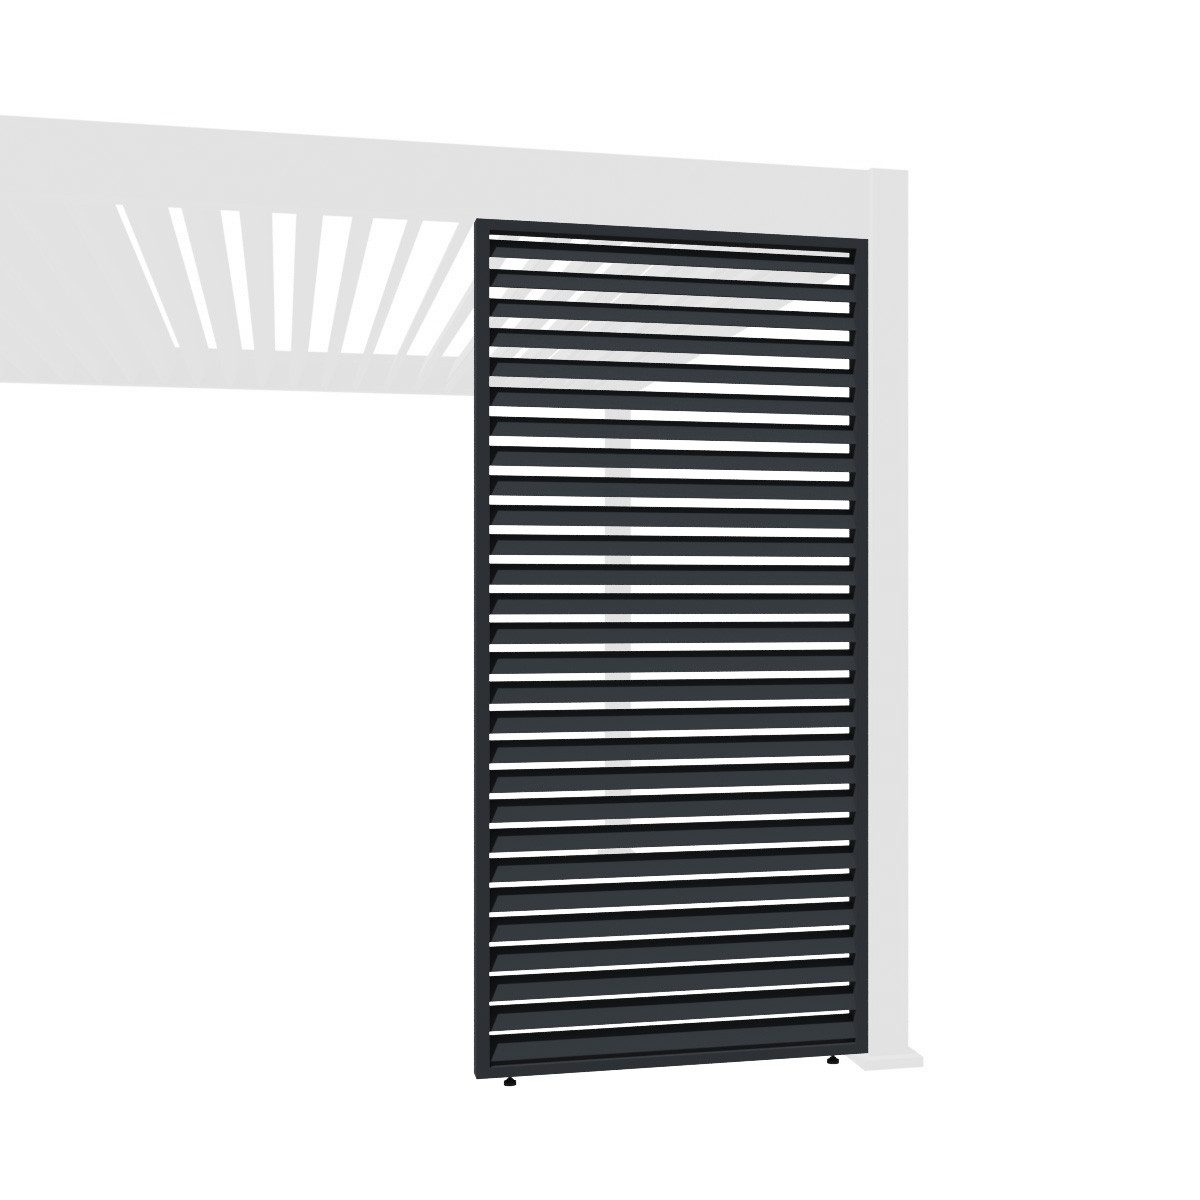 Weide Pavillonseitenteil Horizontale Lamellenwand für Pergola aus Aluminium 3 Maße Grau